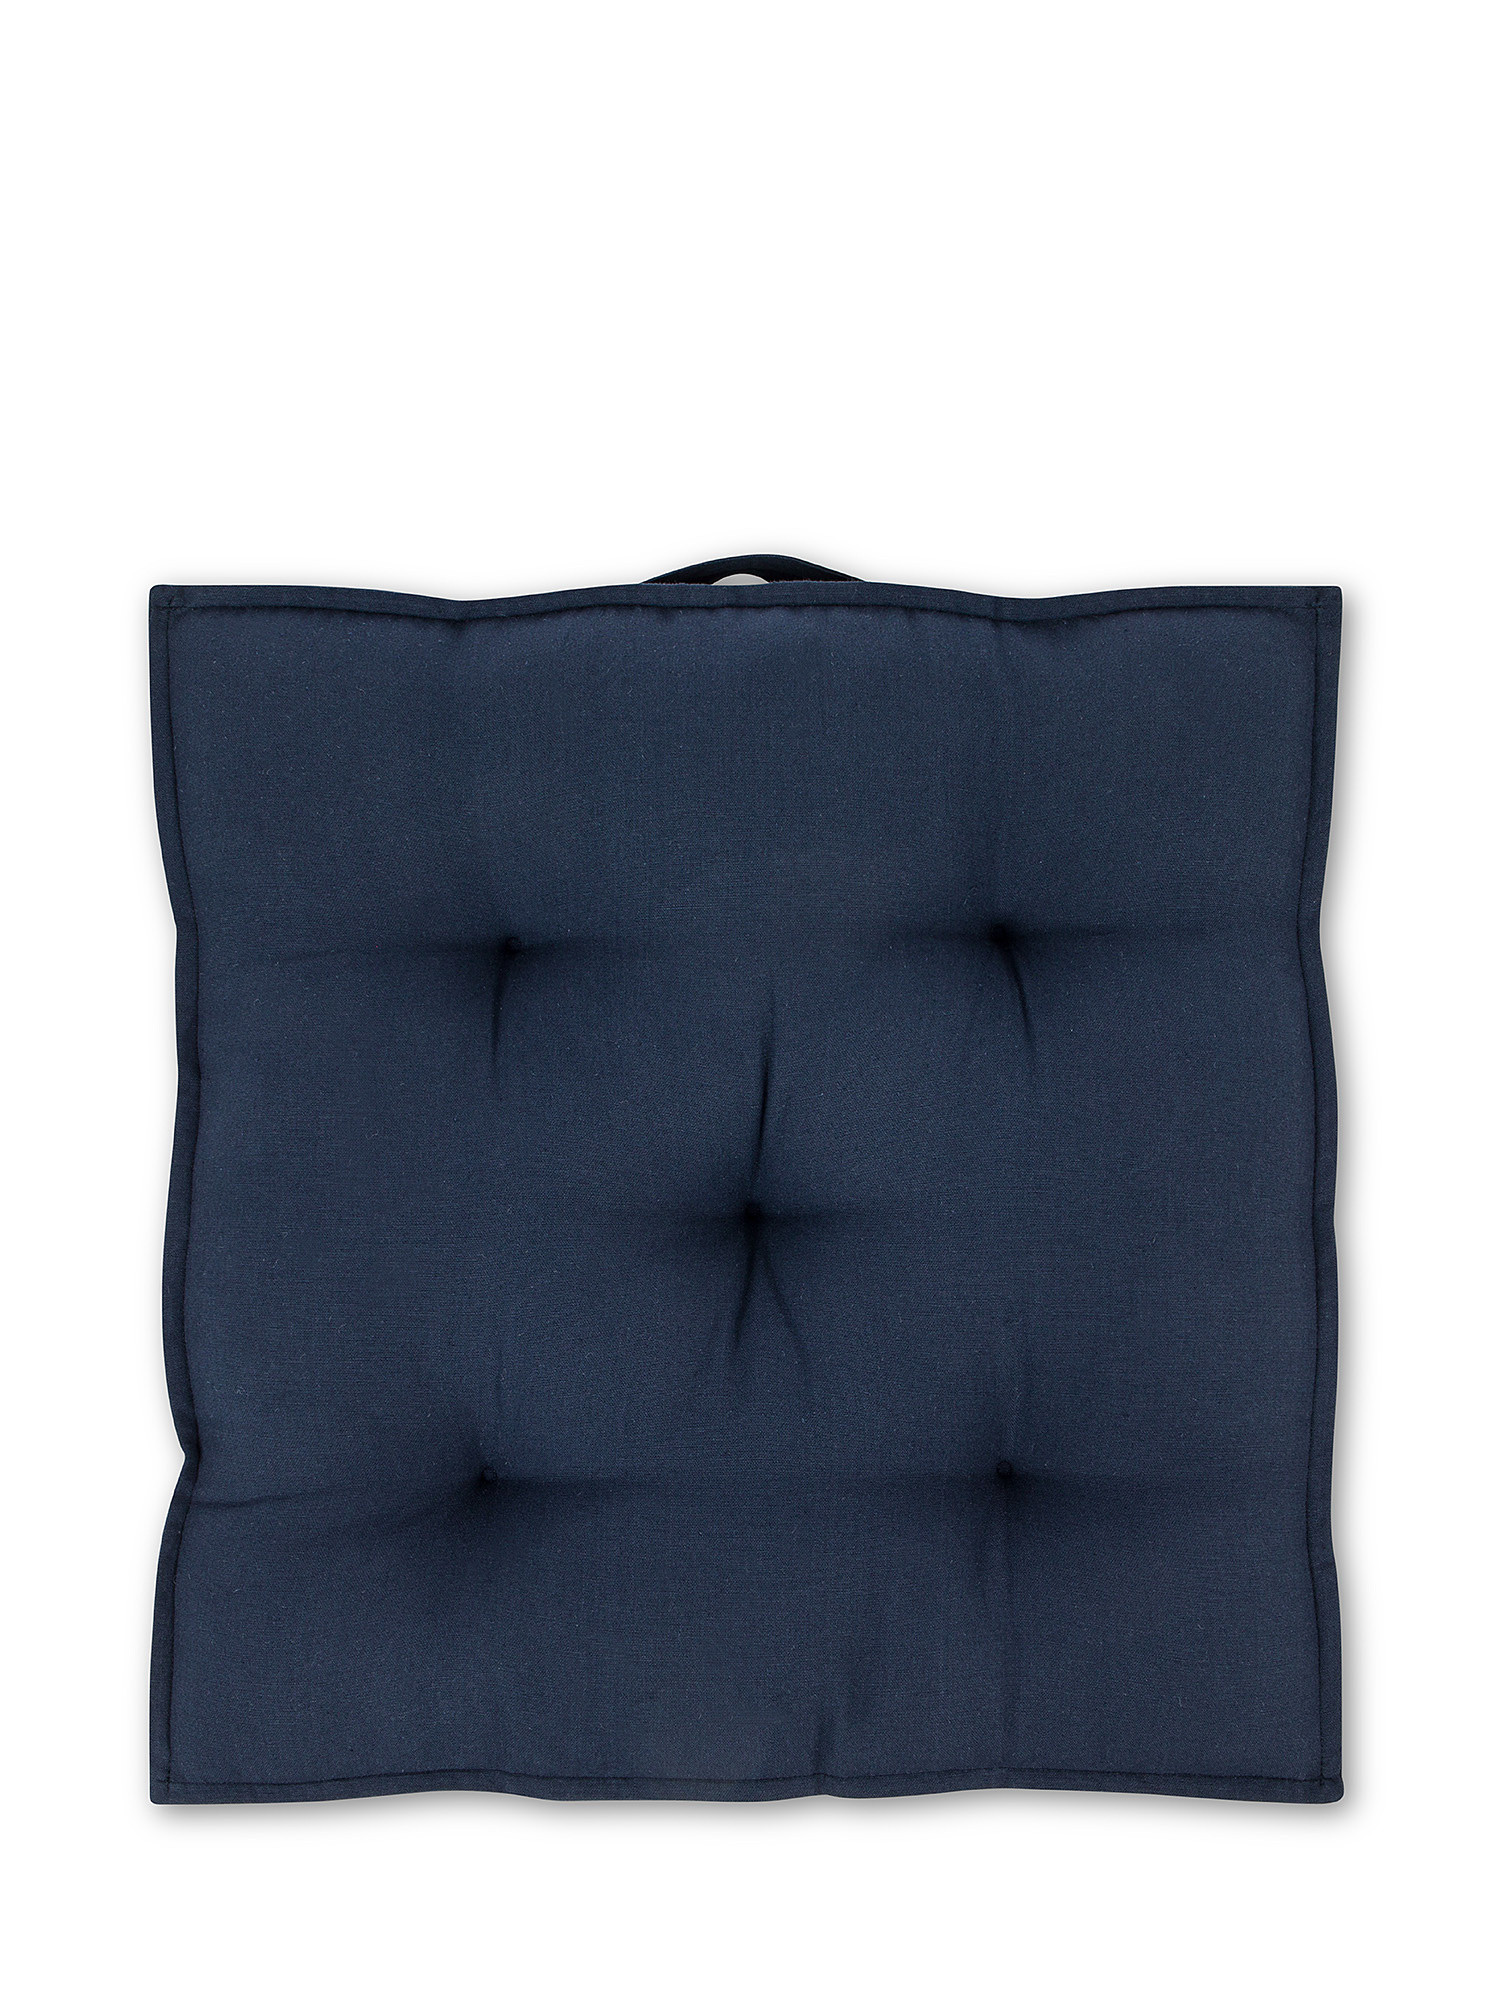 Mattress cushion 50x 50 cm, Blue, large image number 1